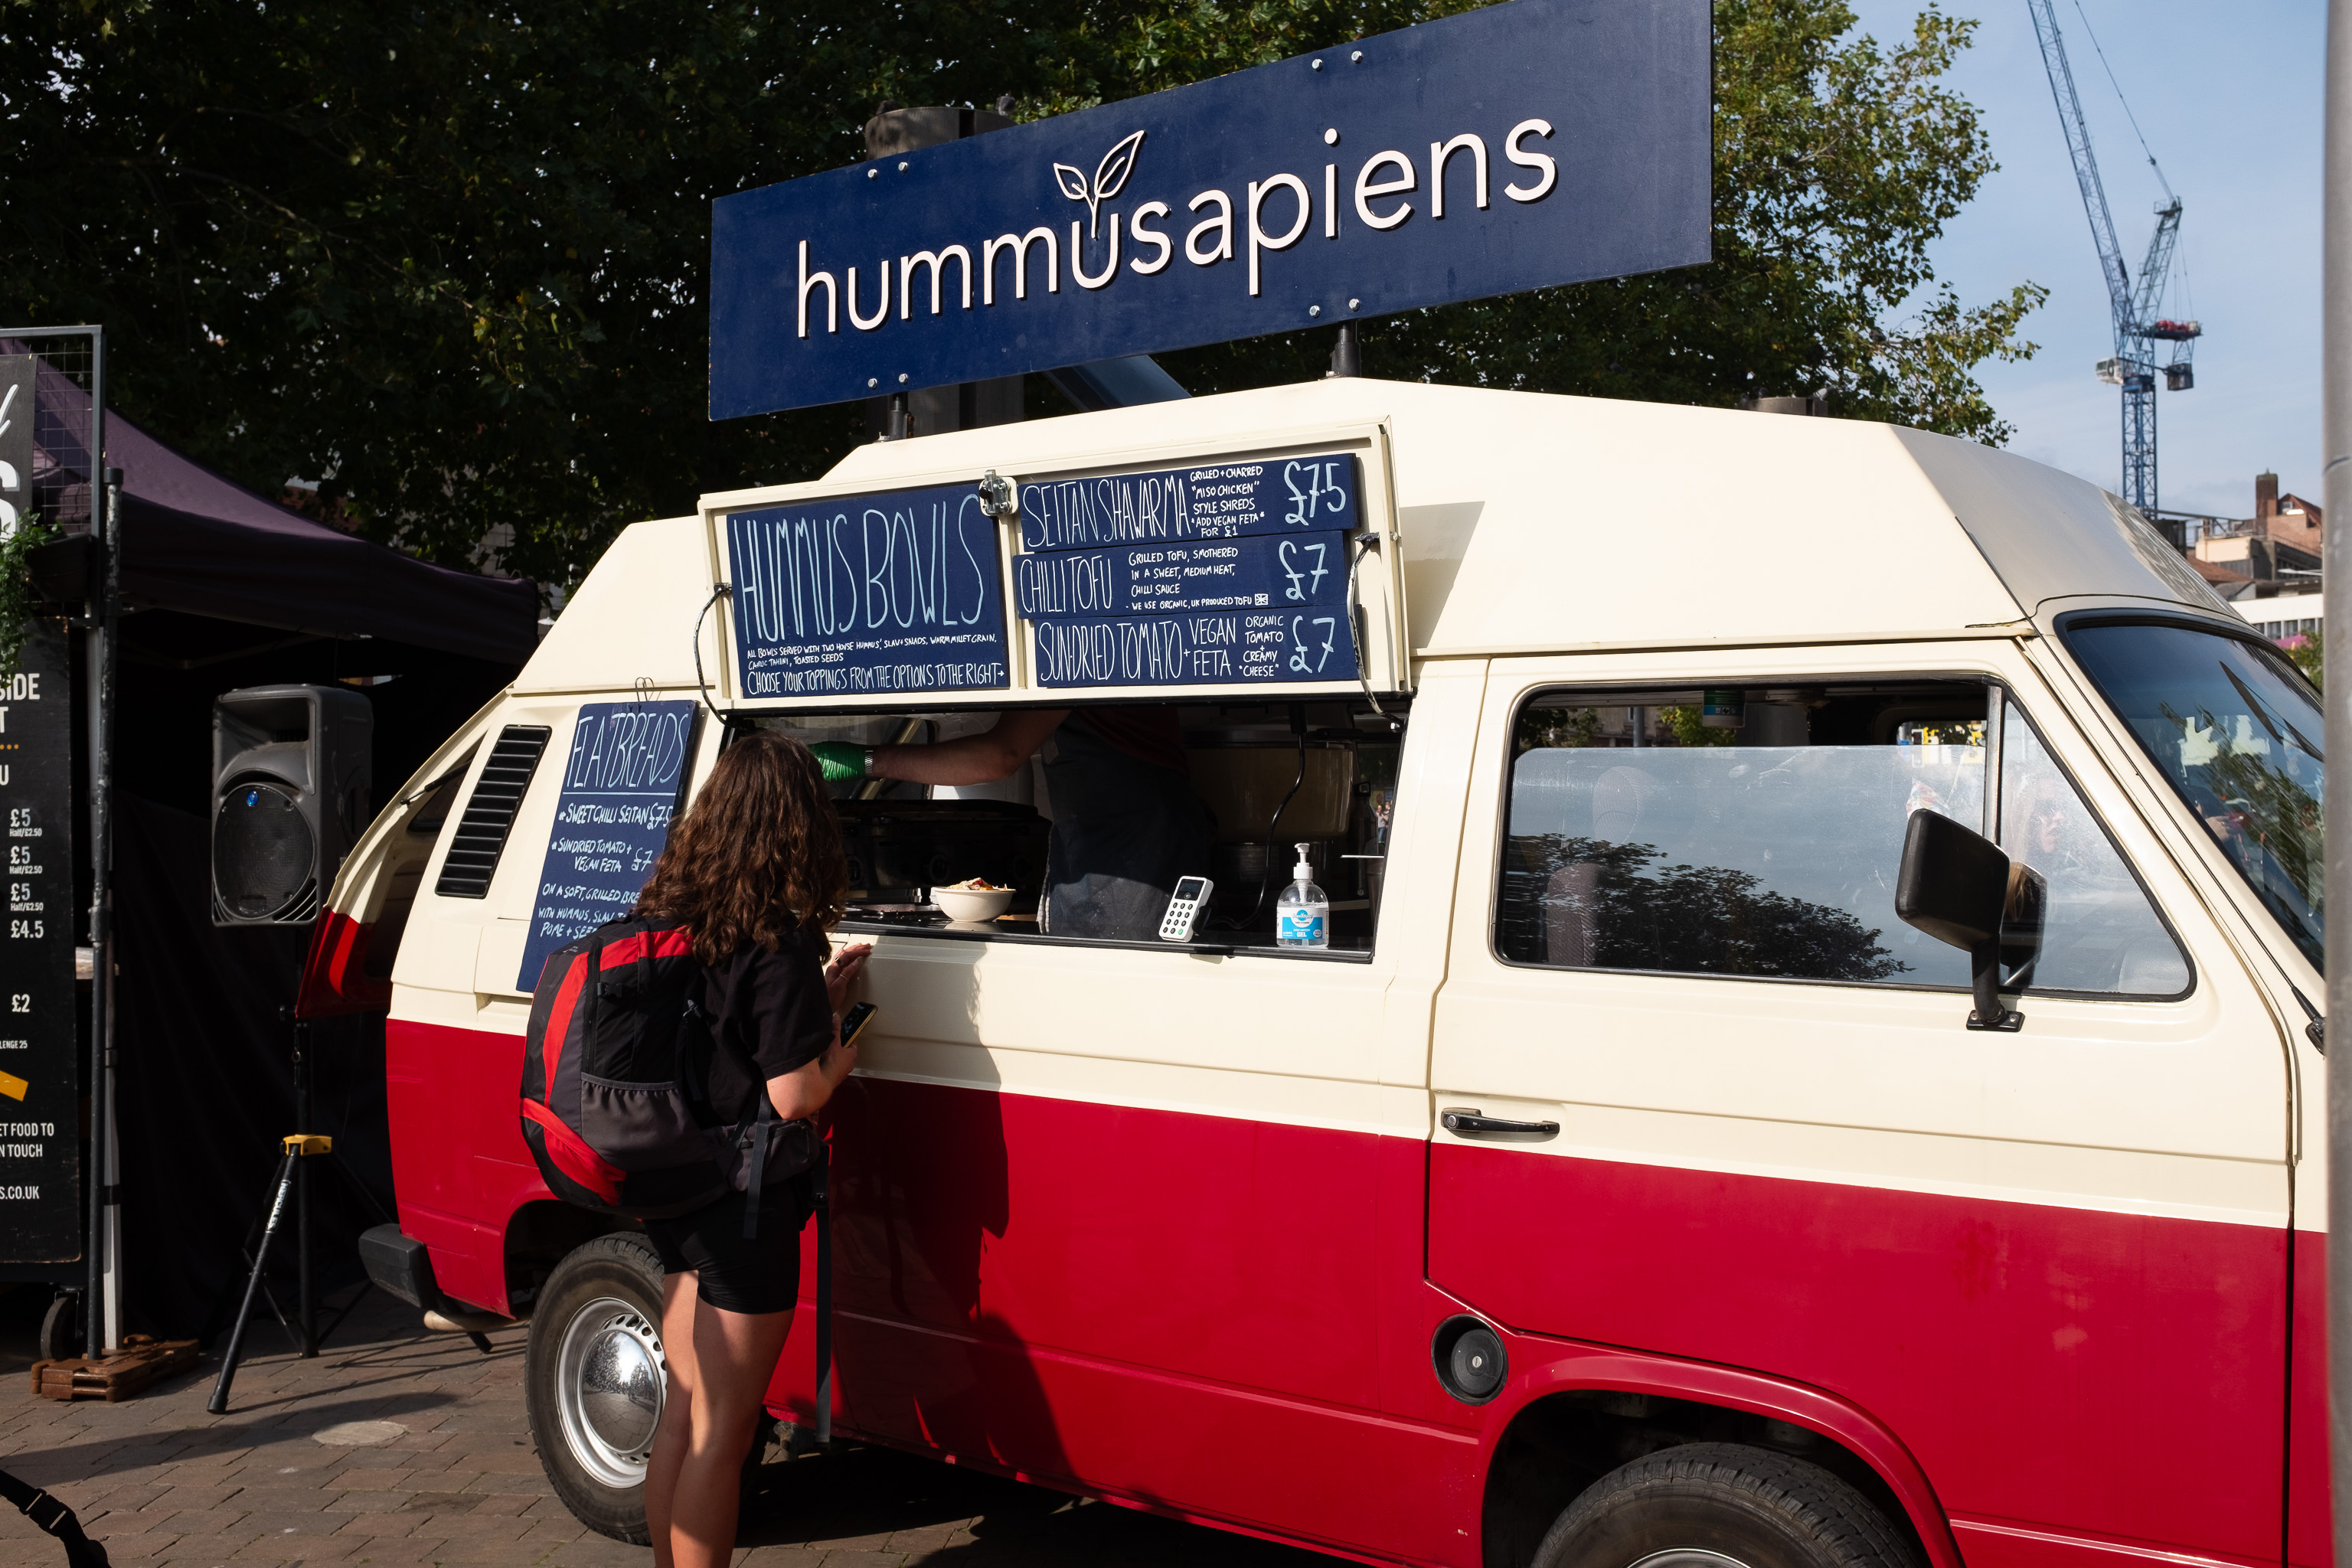 Hummusapiens
I find it hard to resist a food van pun.
